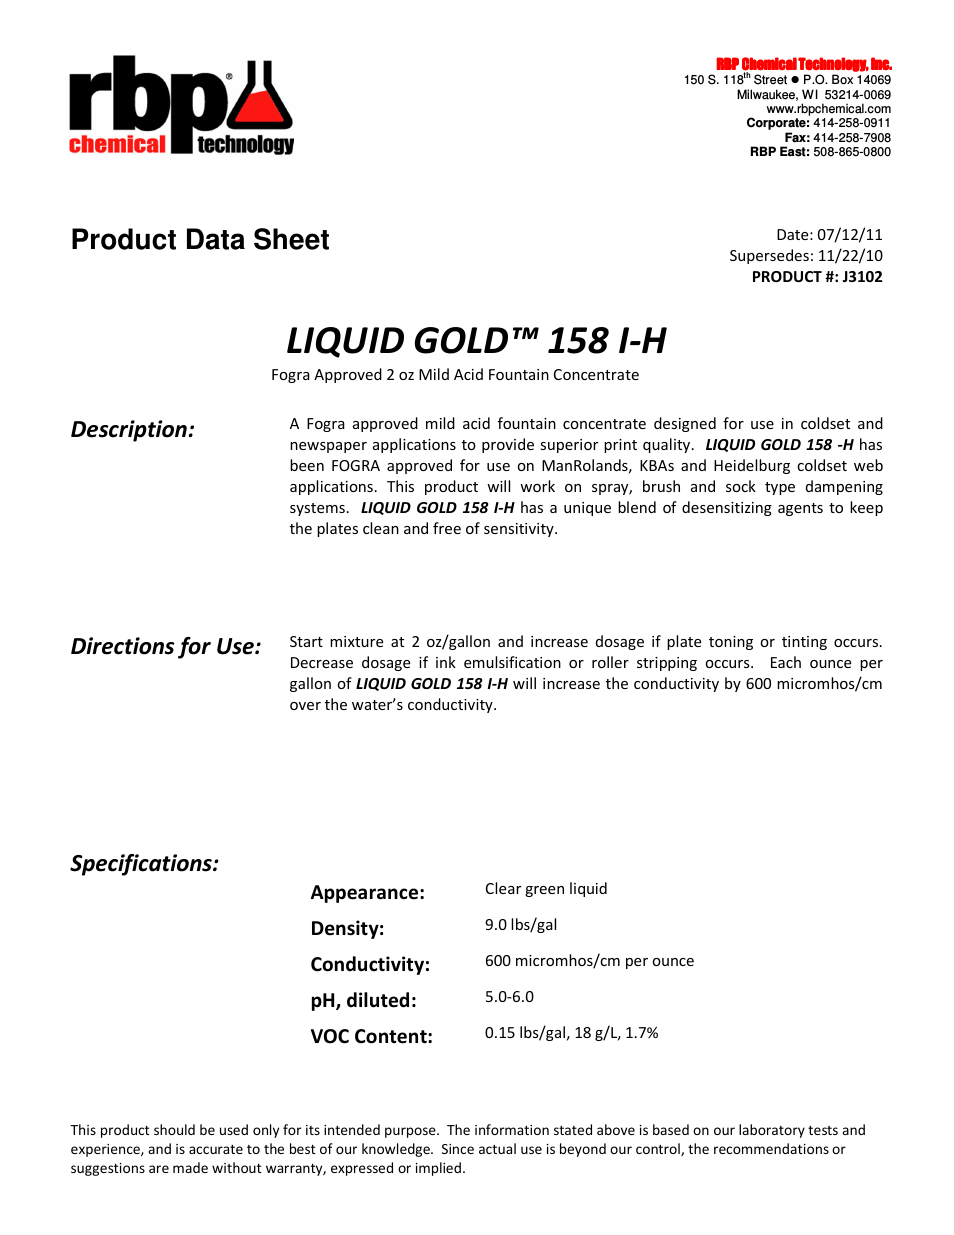 J3102 LIQUID GOLD 158 I-H